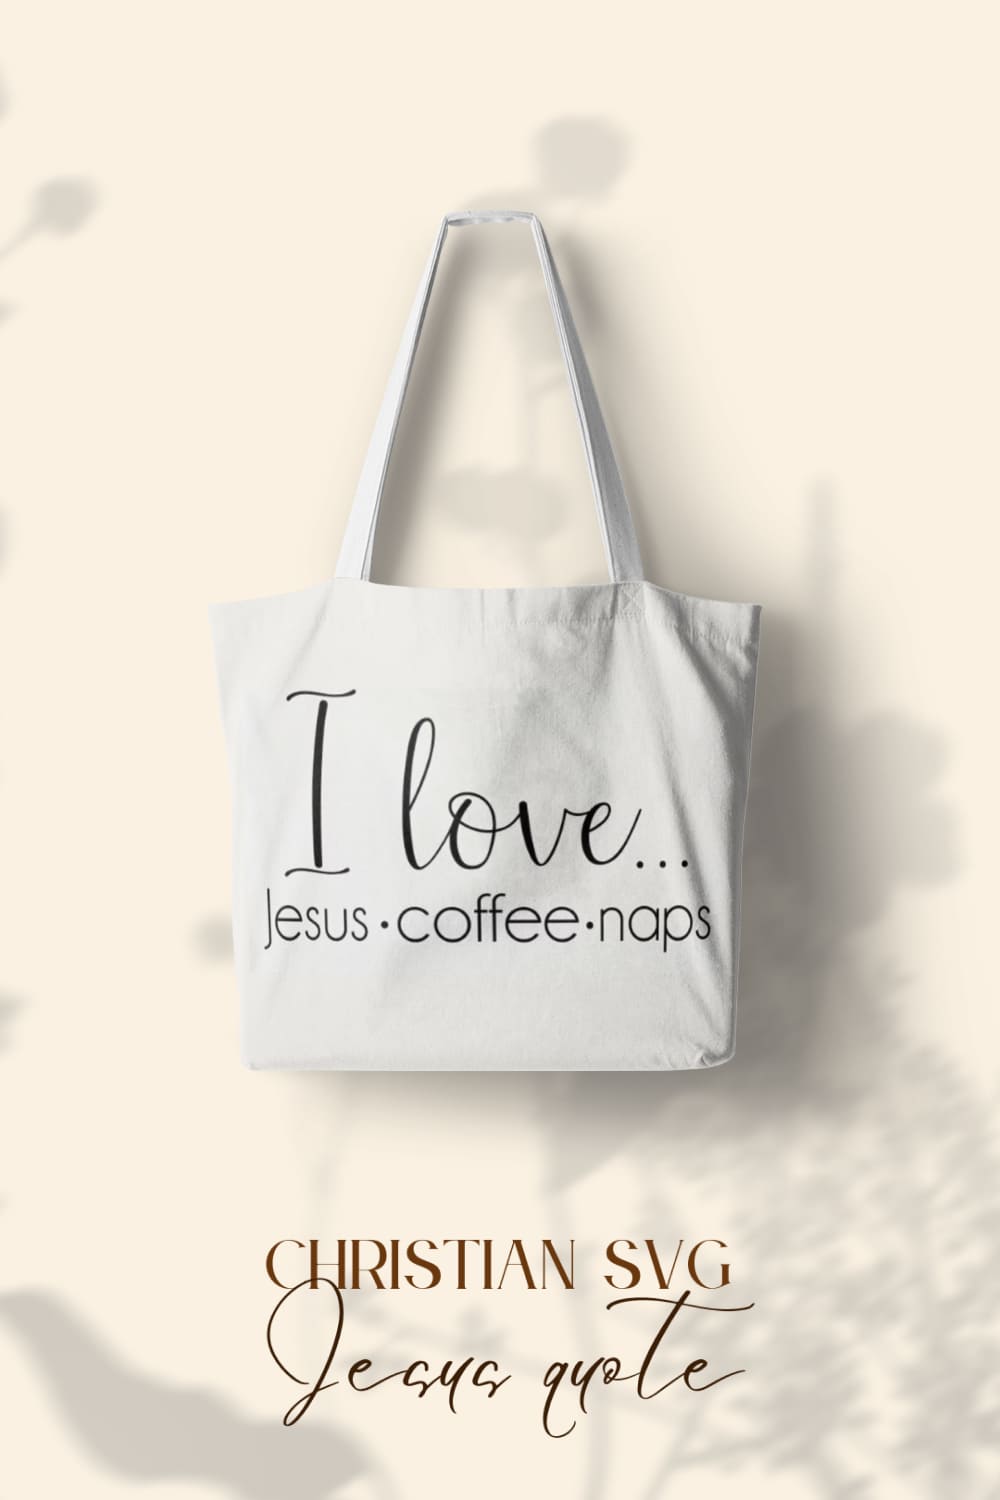 Inscription "I Love Jesus Coffee and Naps SVG" on the white bag.